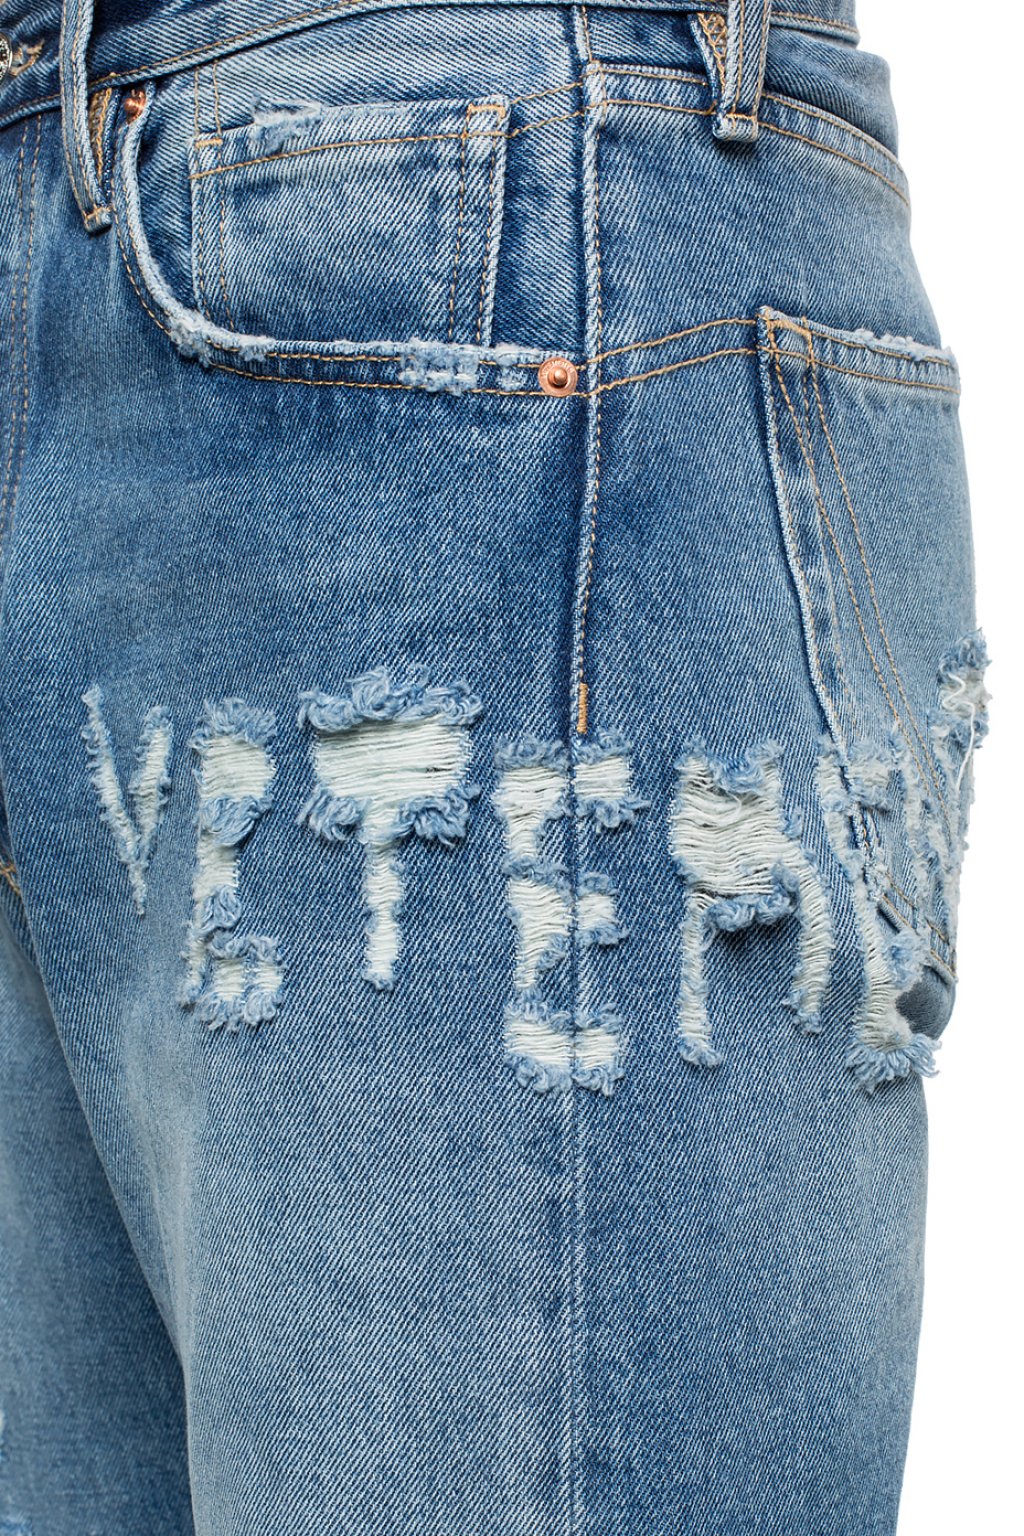 Blue Distressed jeans VETEMENTS - Pepe Jeans Kingston zip regular